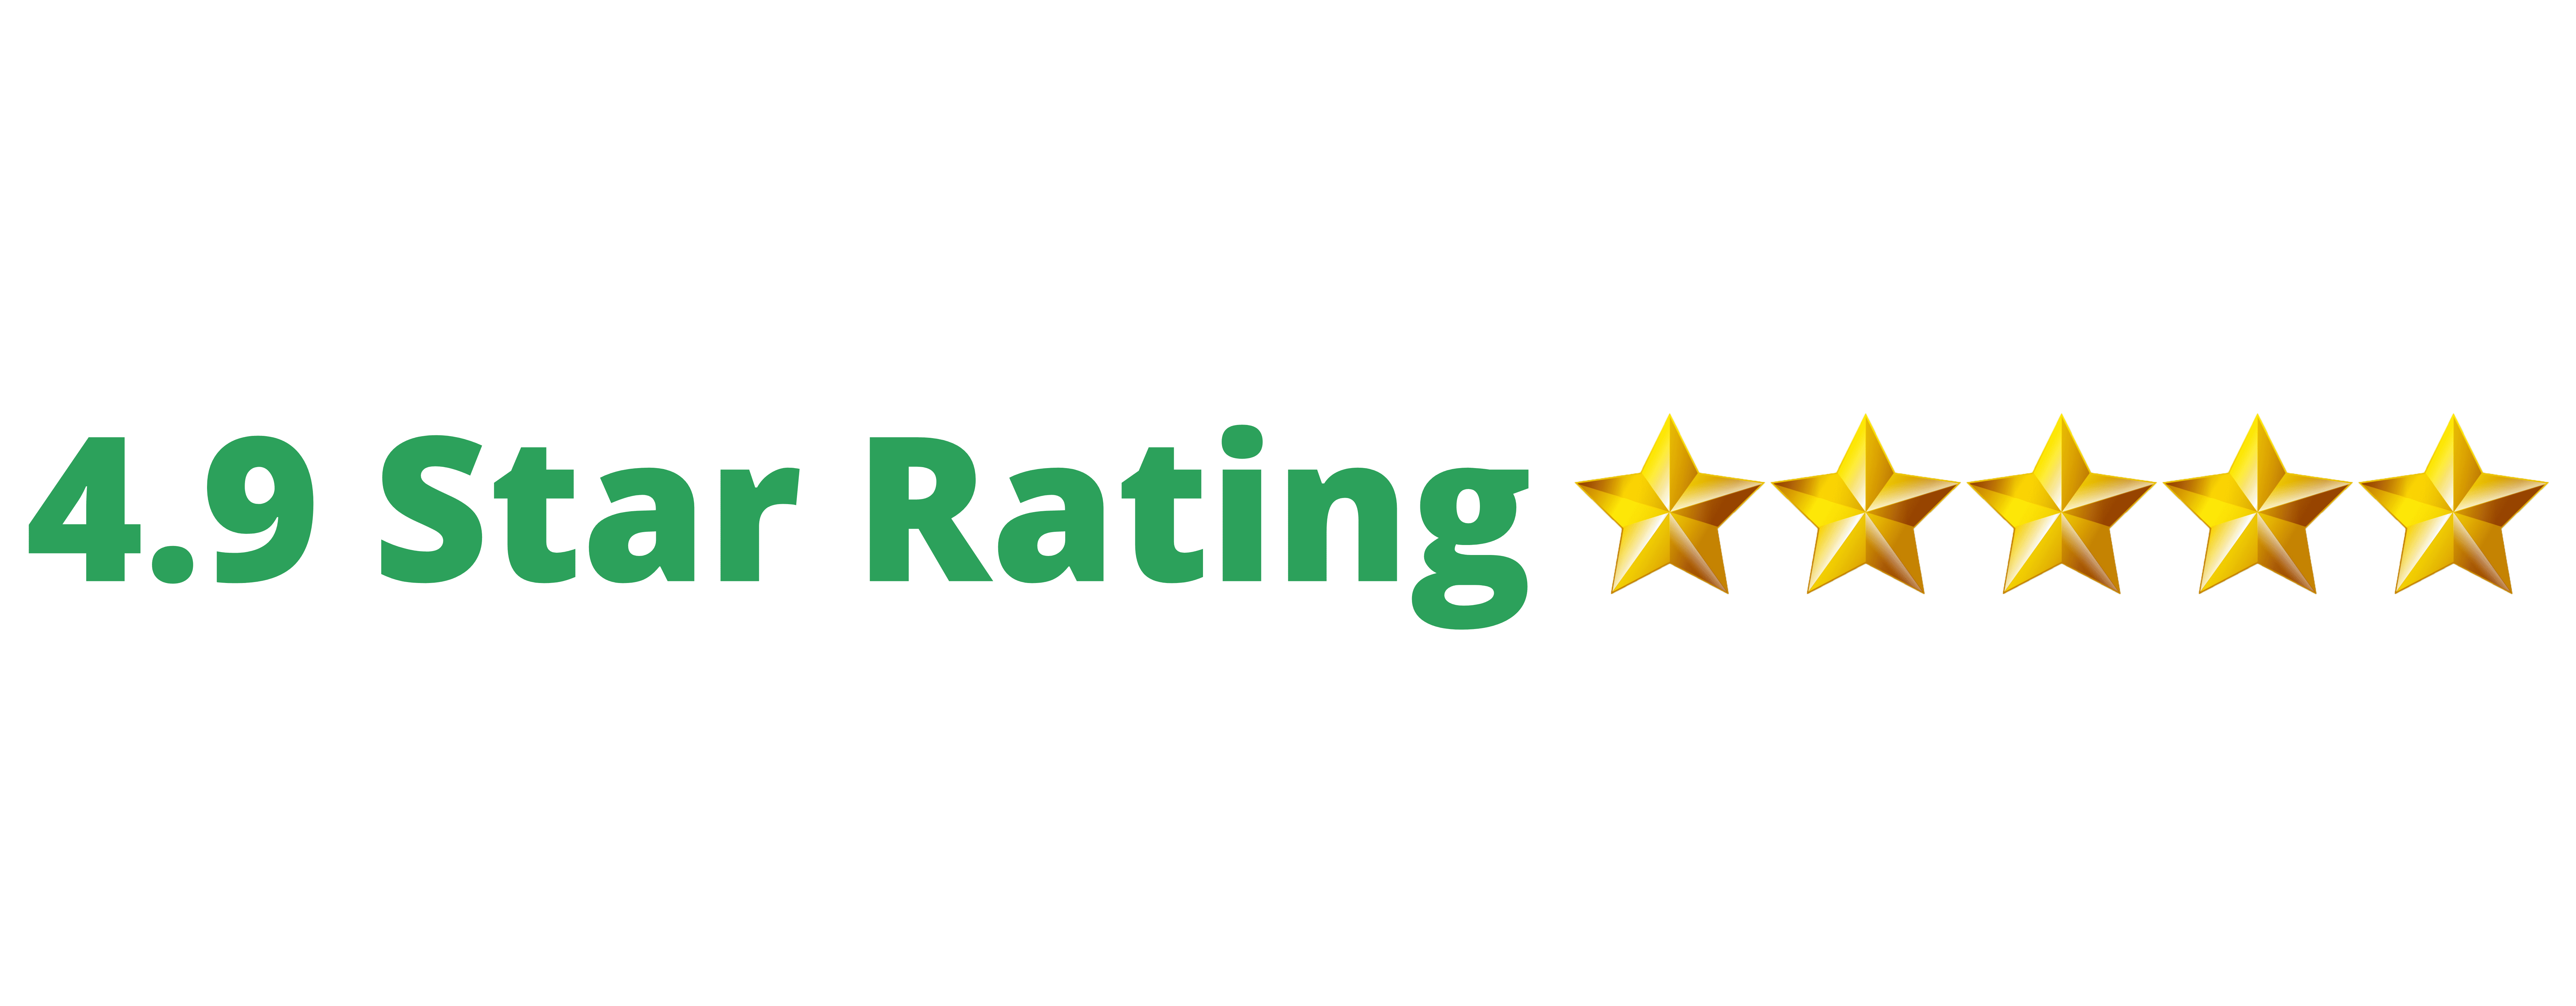 GMB Star Rating-2